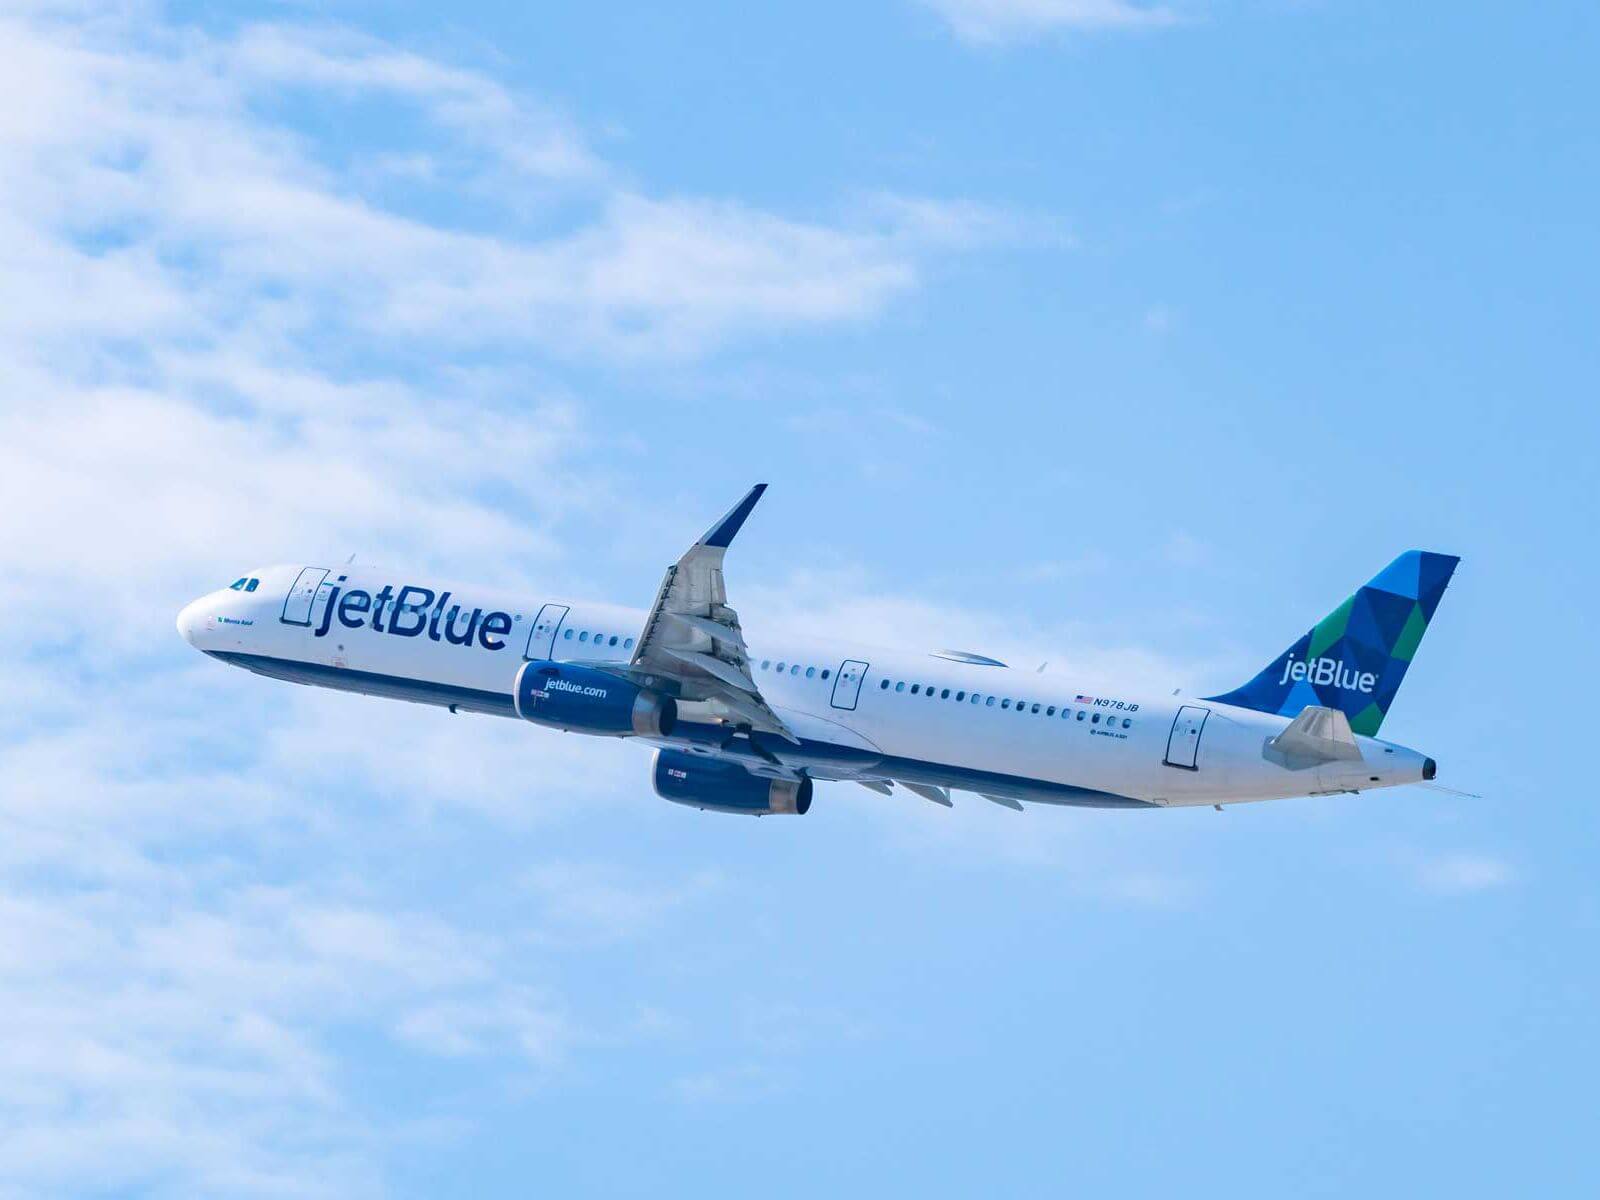 Jetblue Airline Airplane